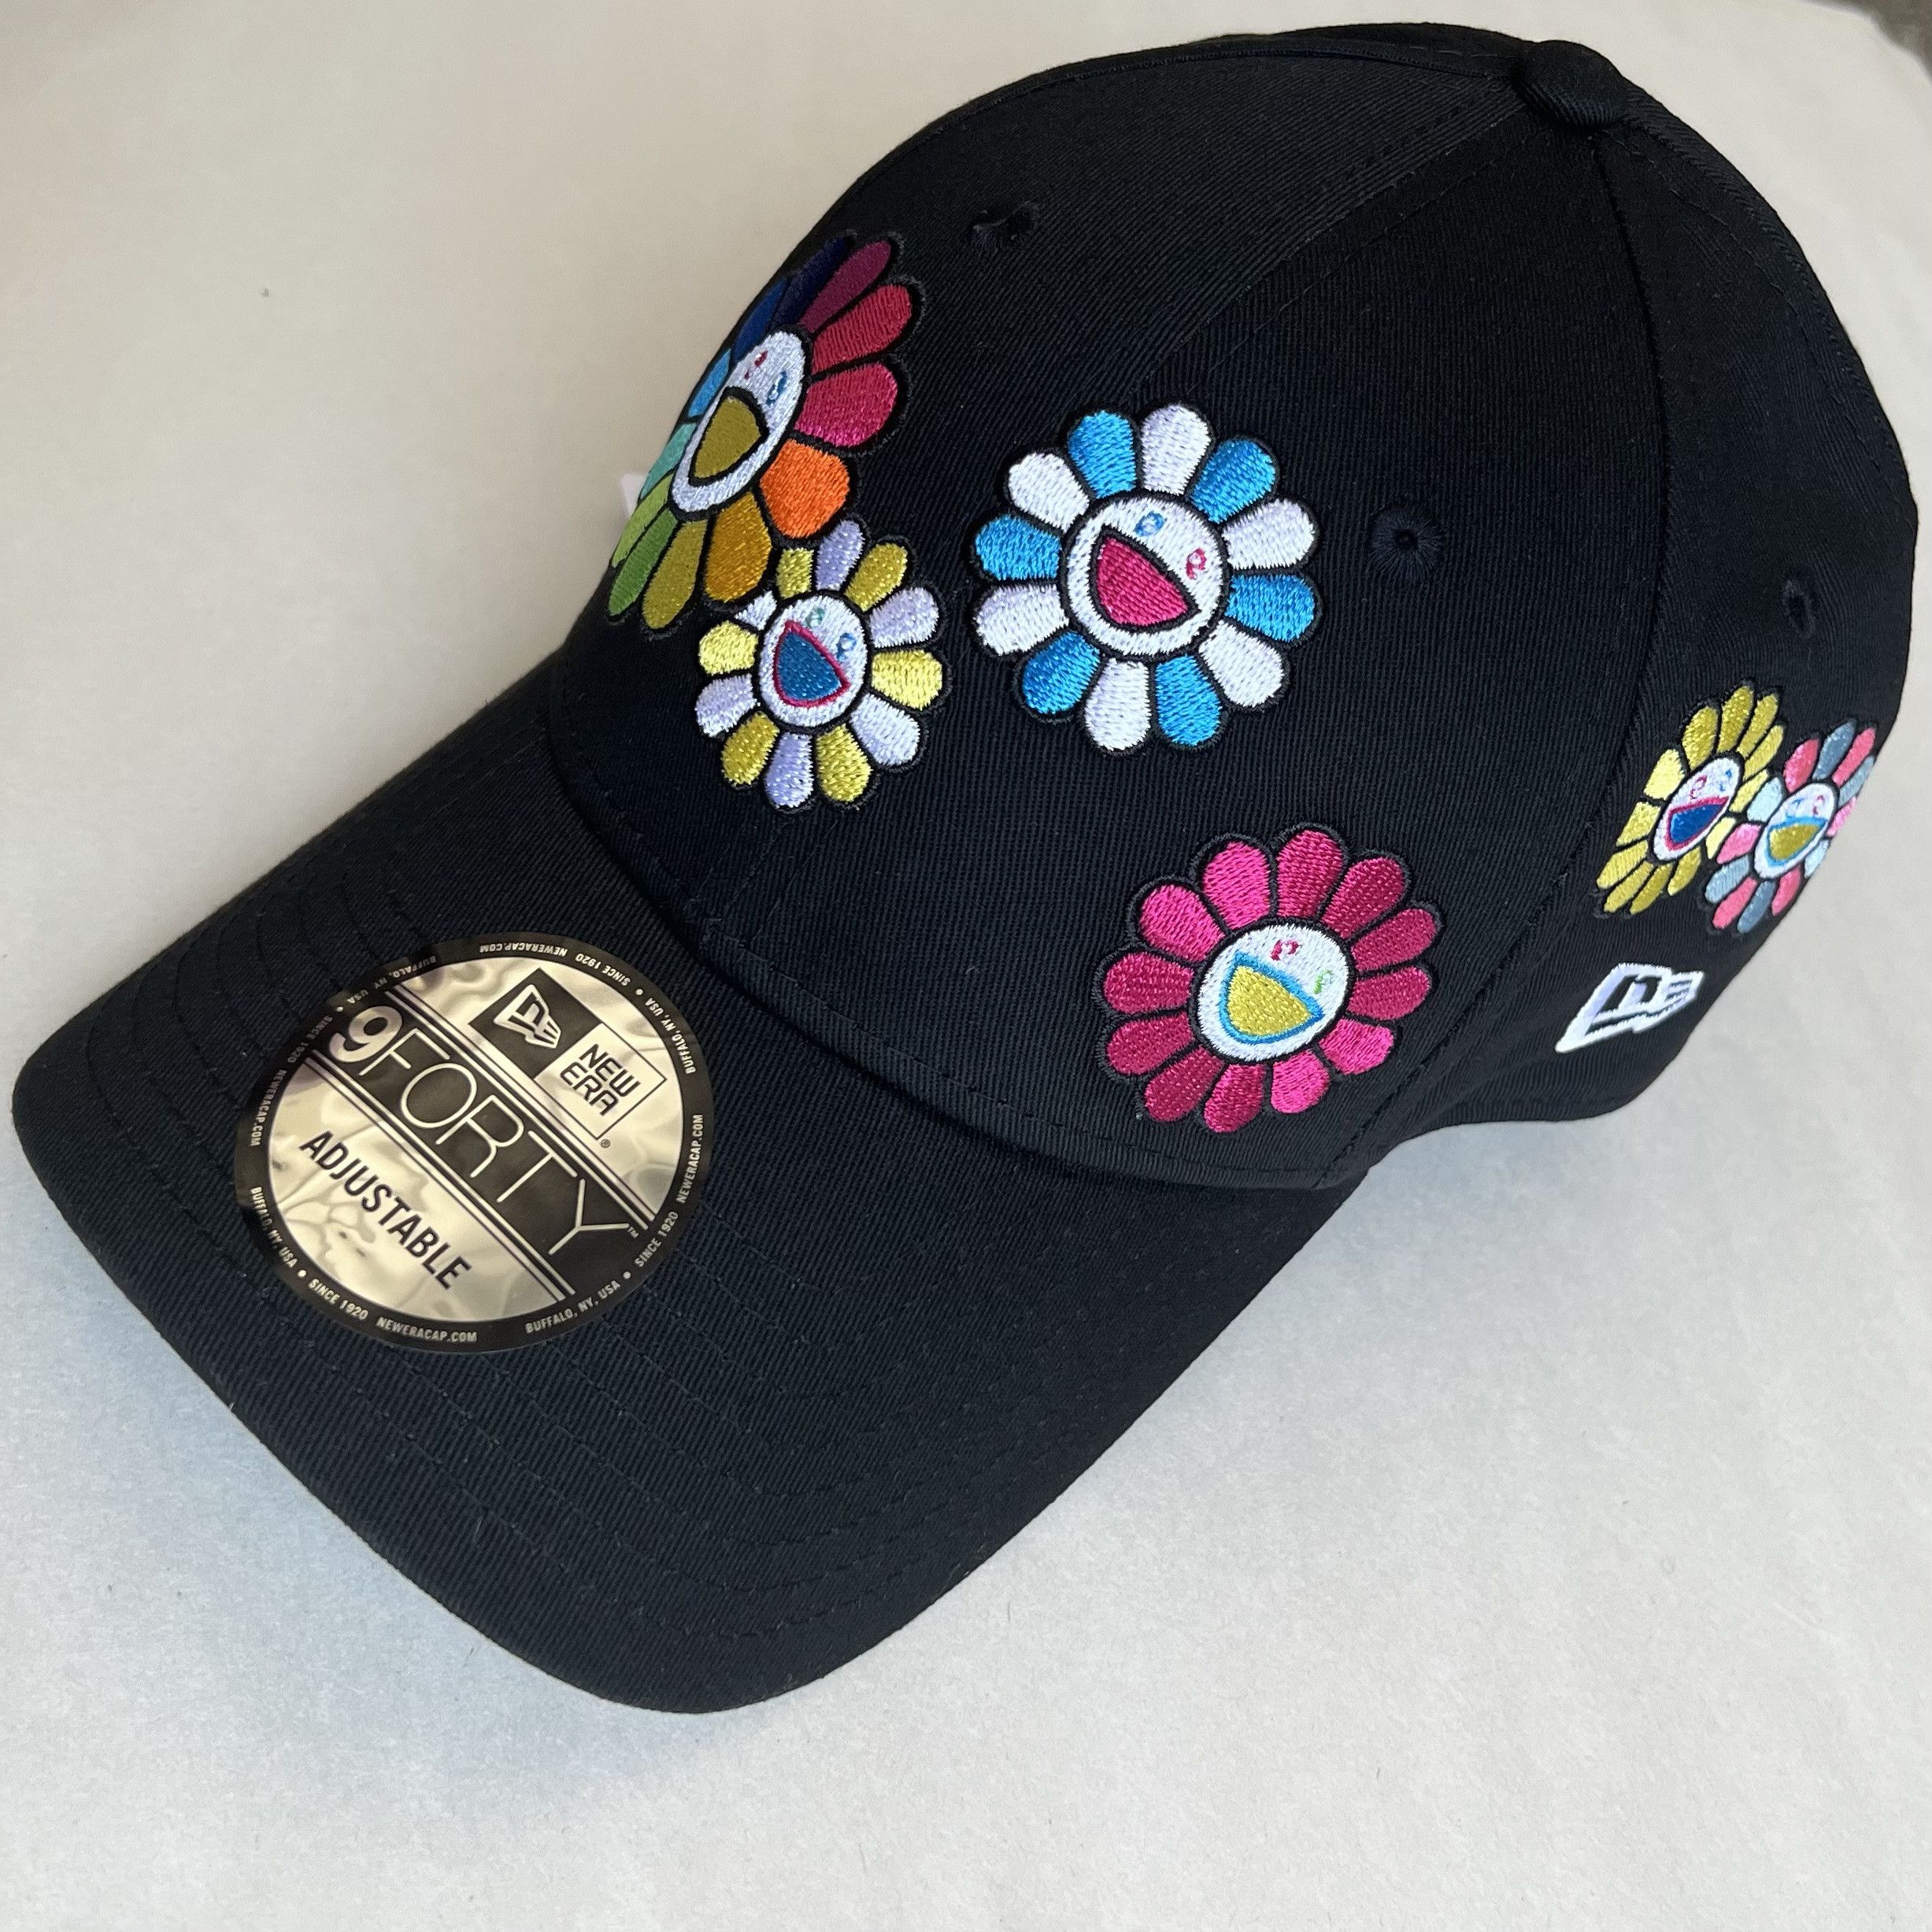 New Era x Takashi Murakami Flower Allover Print Fitted Hat Cap Size 7 1/4